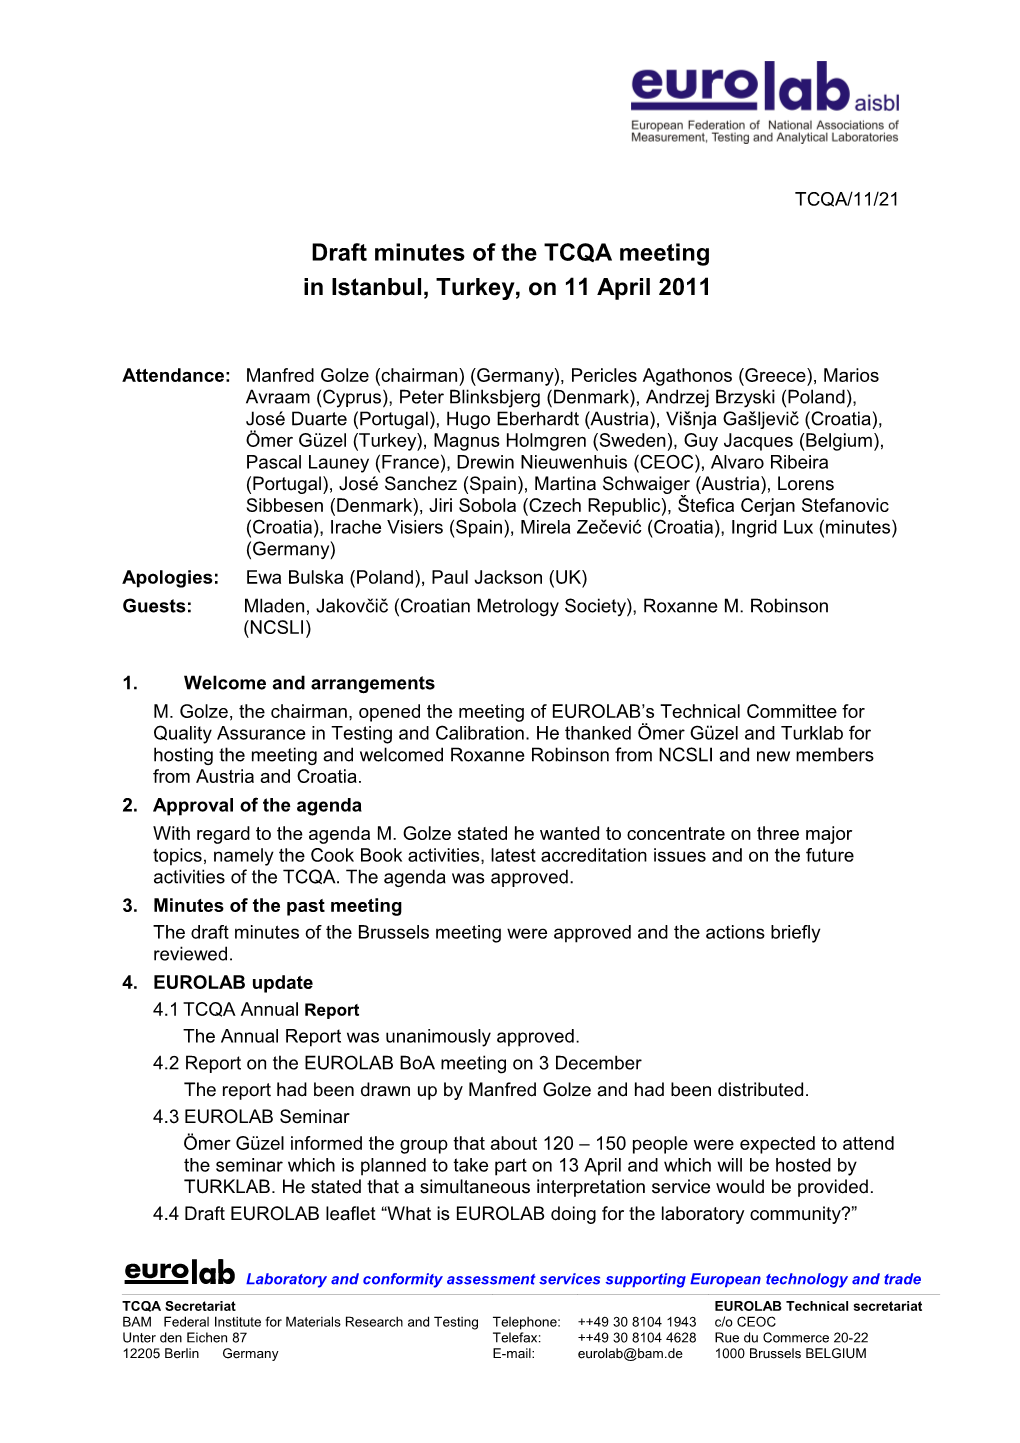 Draft Minutes of the TCQA Meeting